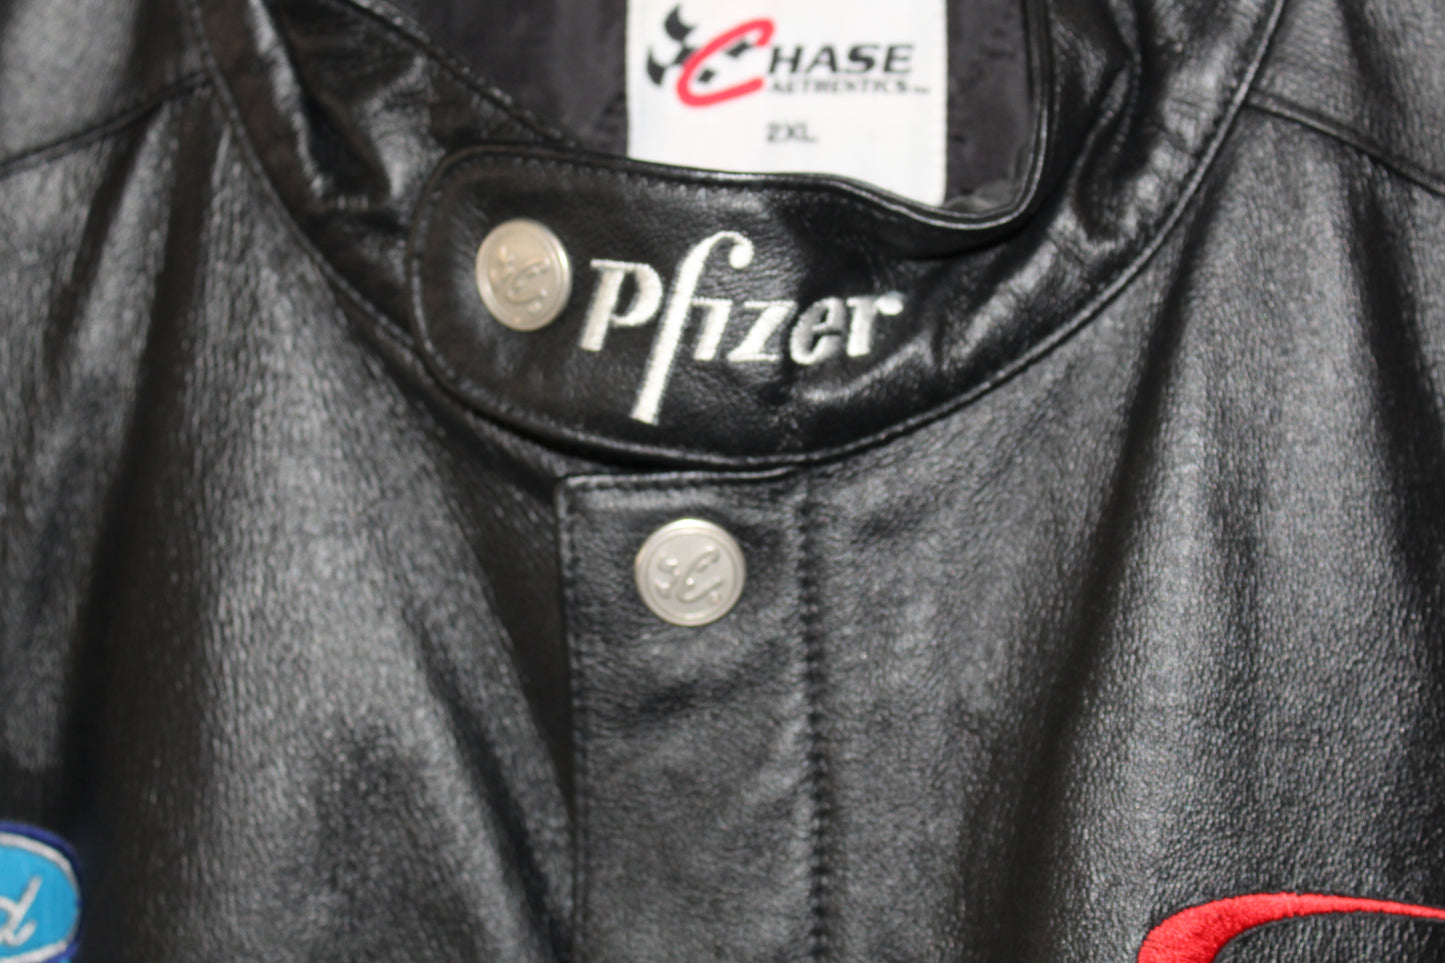 Pfizer Racing NASCAR Leather Chase Authentics Jacket (XXL)